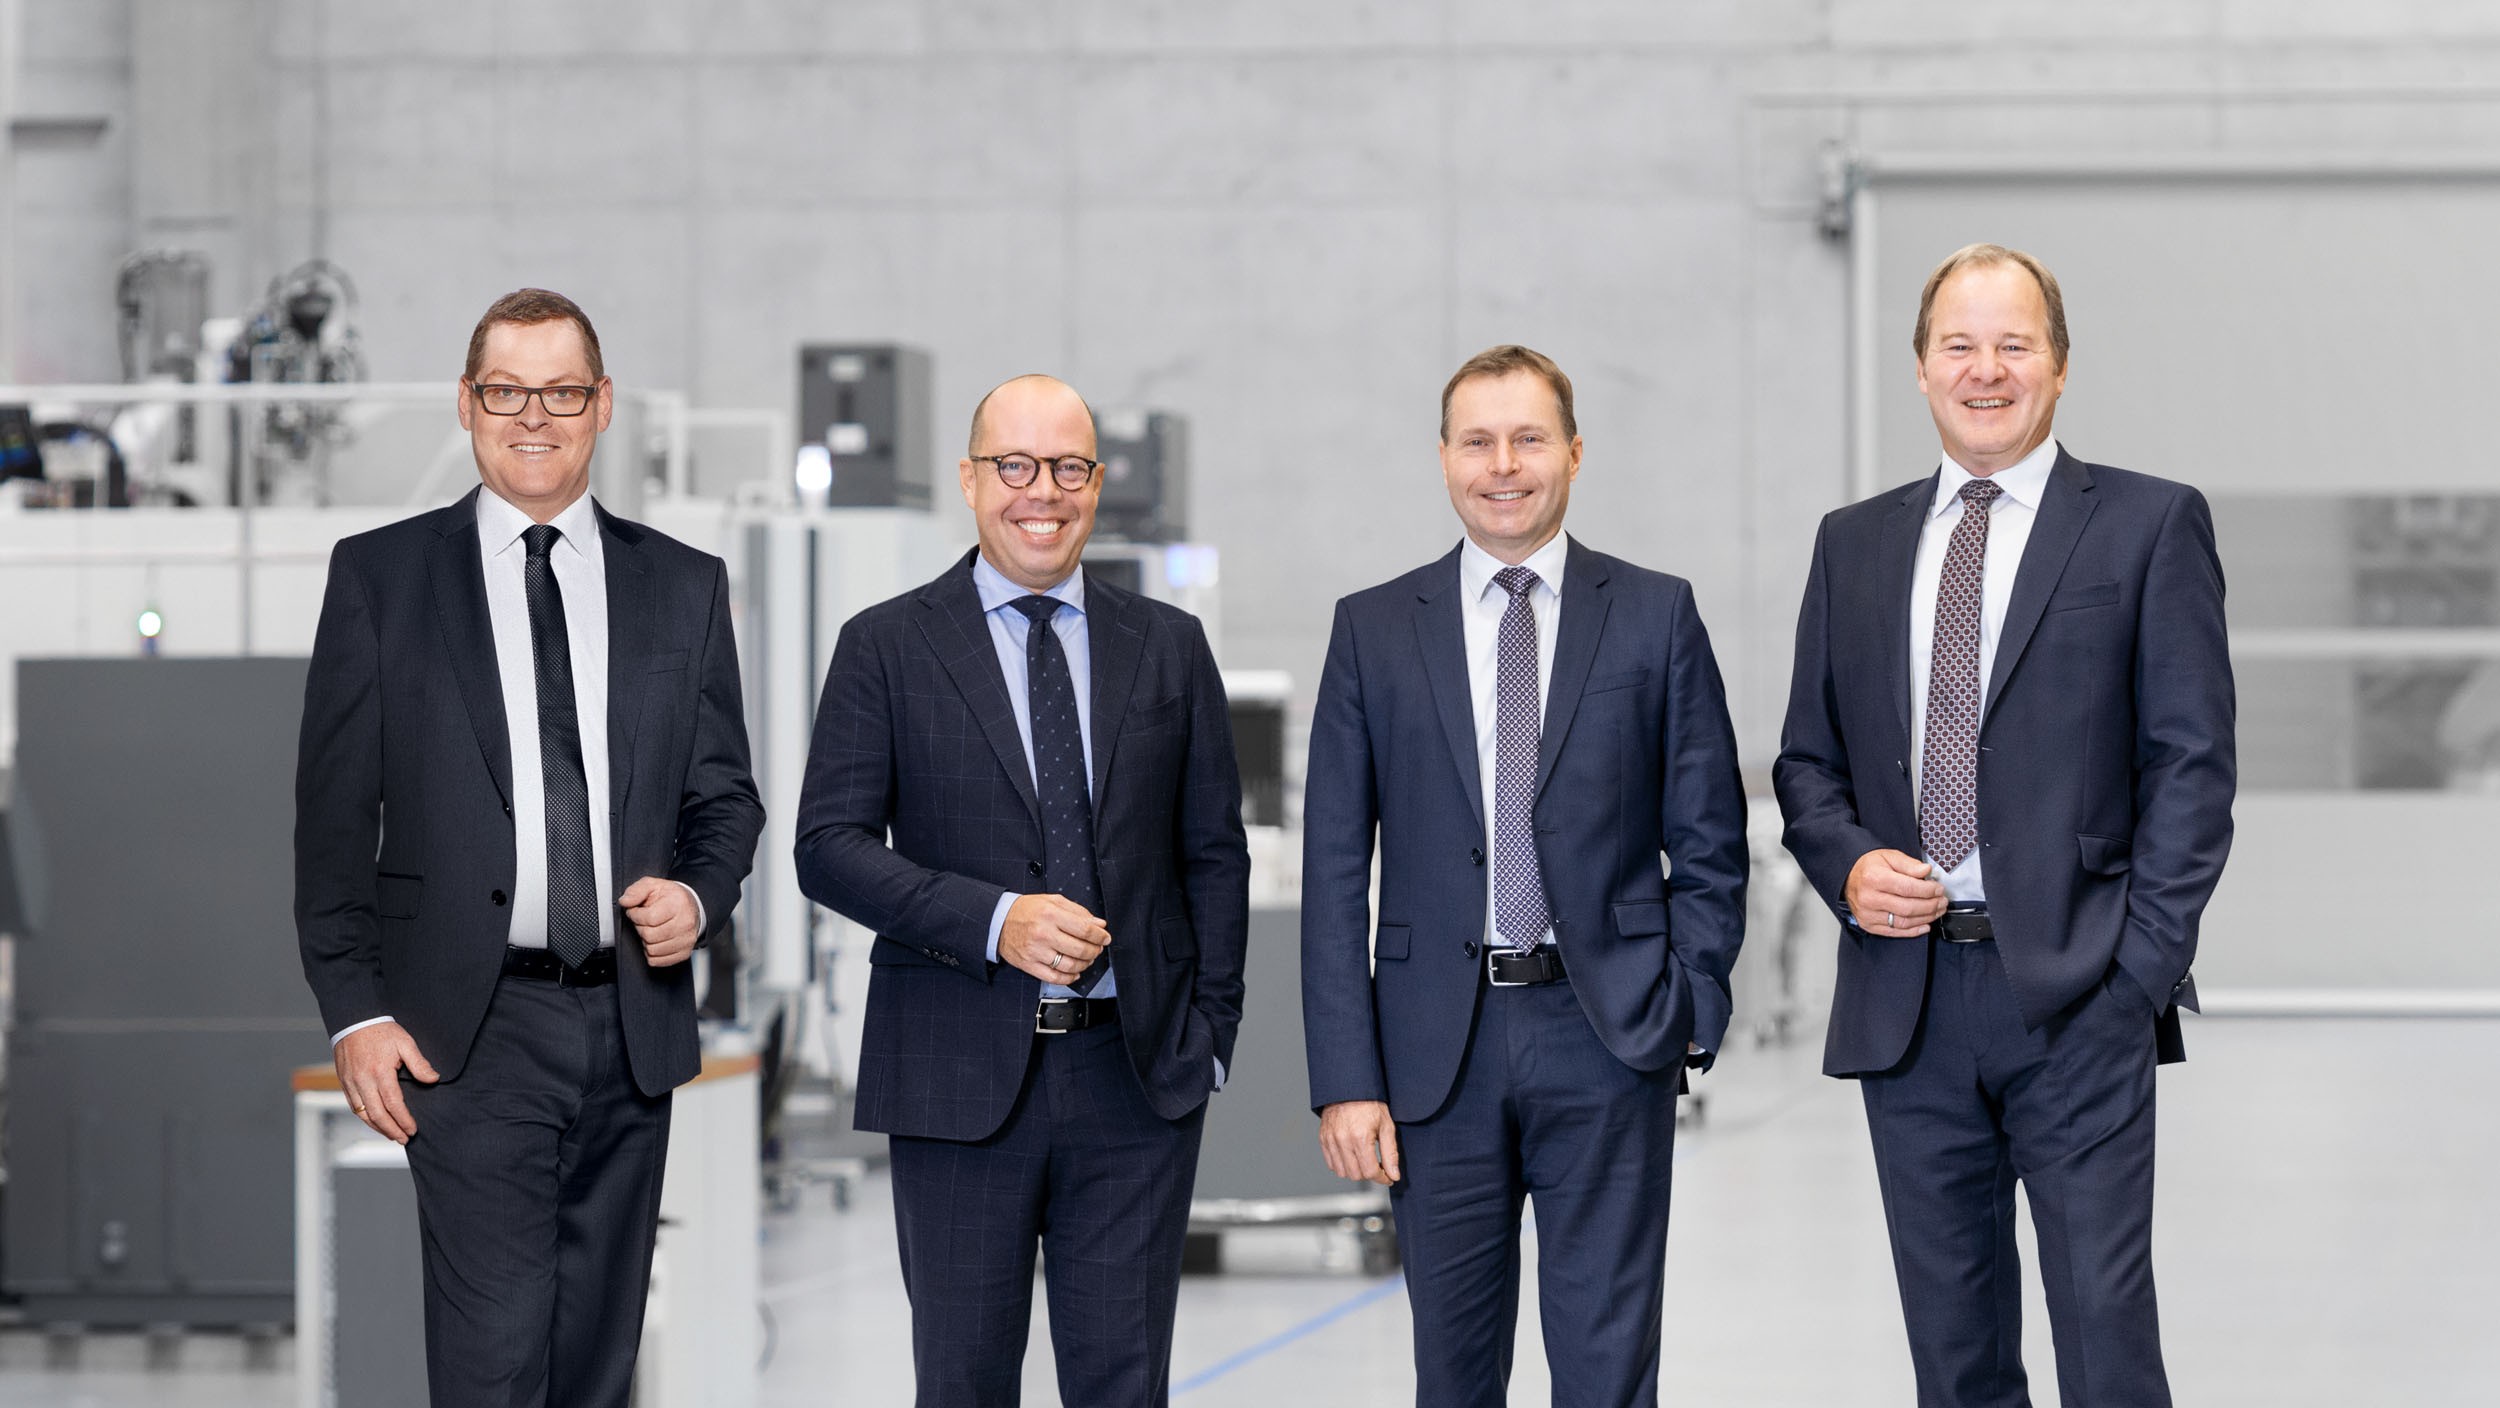 The management team of the CHIRON Group SE: Markus Unterstein (CFO), Carsten Liske (CEO), Dr. Claus Eppler (CTO) and Bernd Hilgarth (CSO).